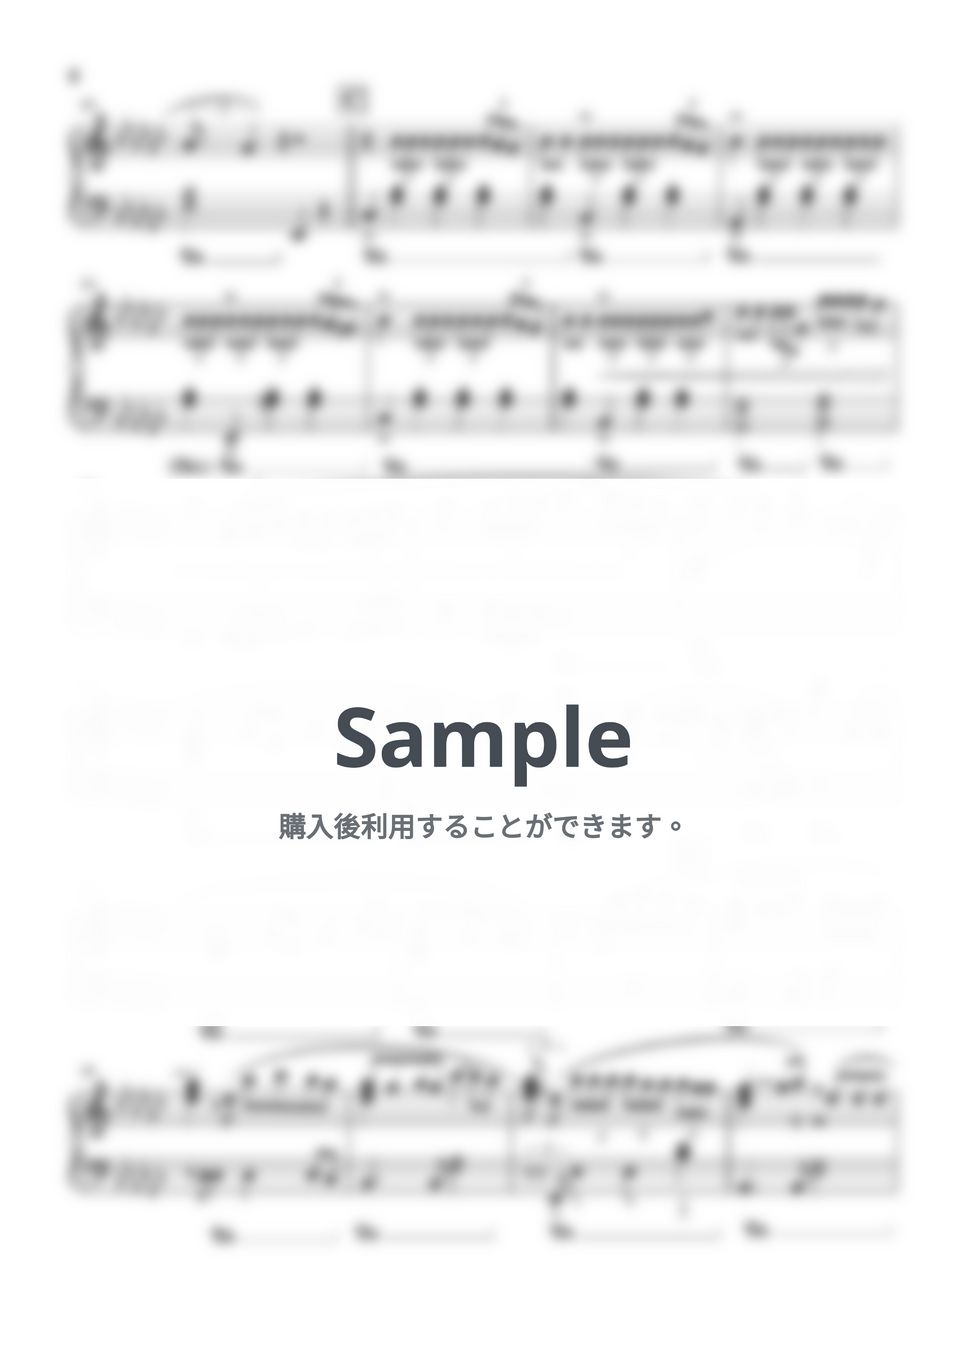 Official髭男dism - Subtitle (【ドラマ】Silent/中級レベル) by Saori8Piano